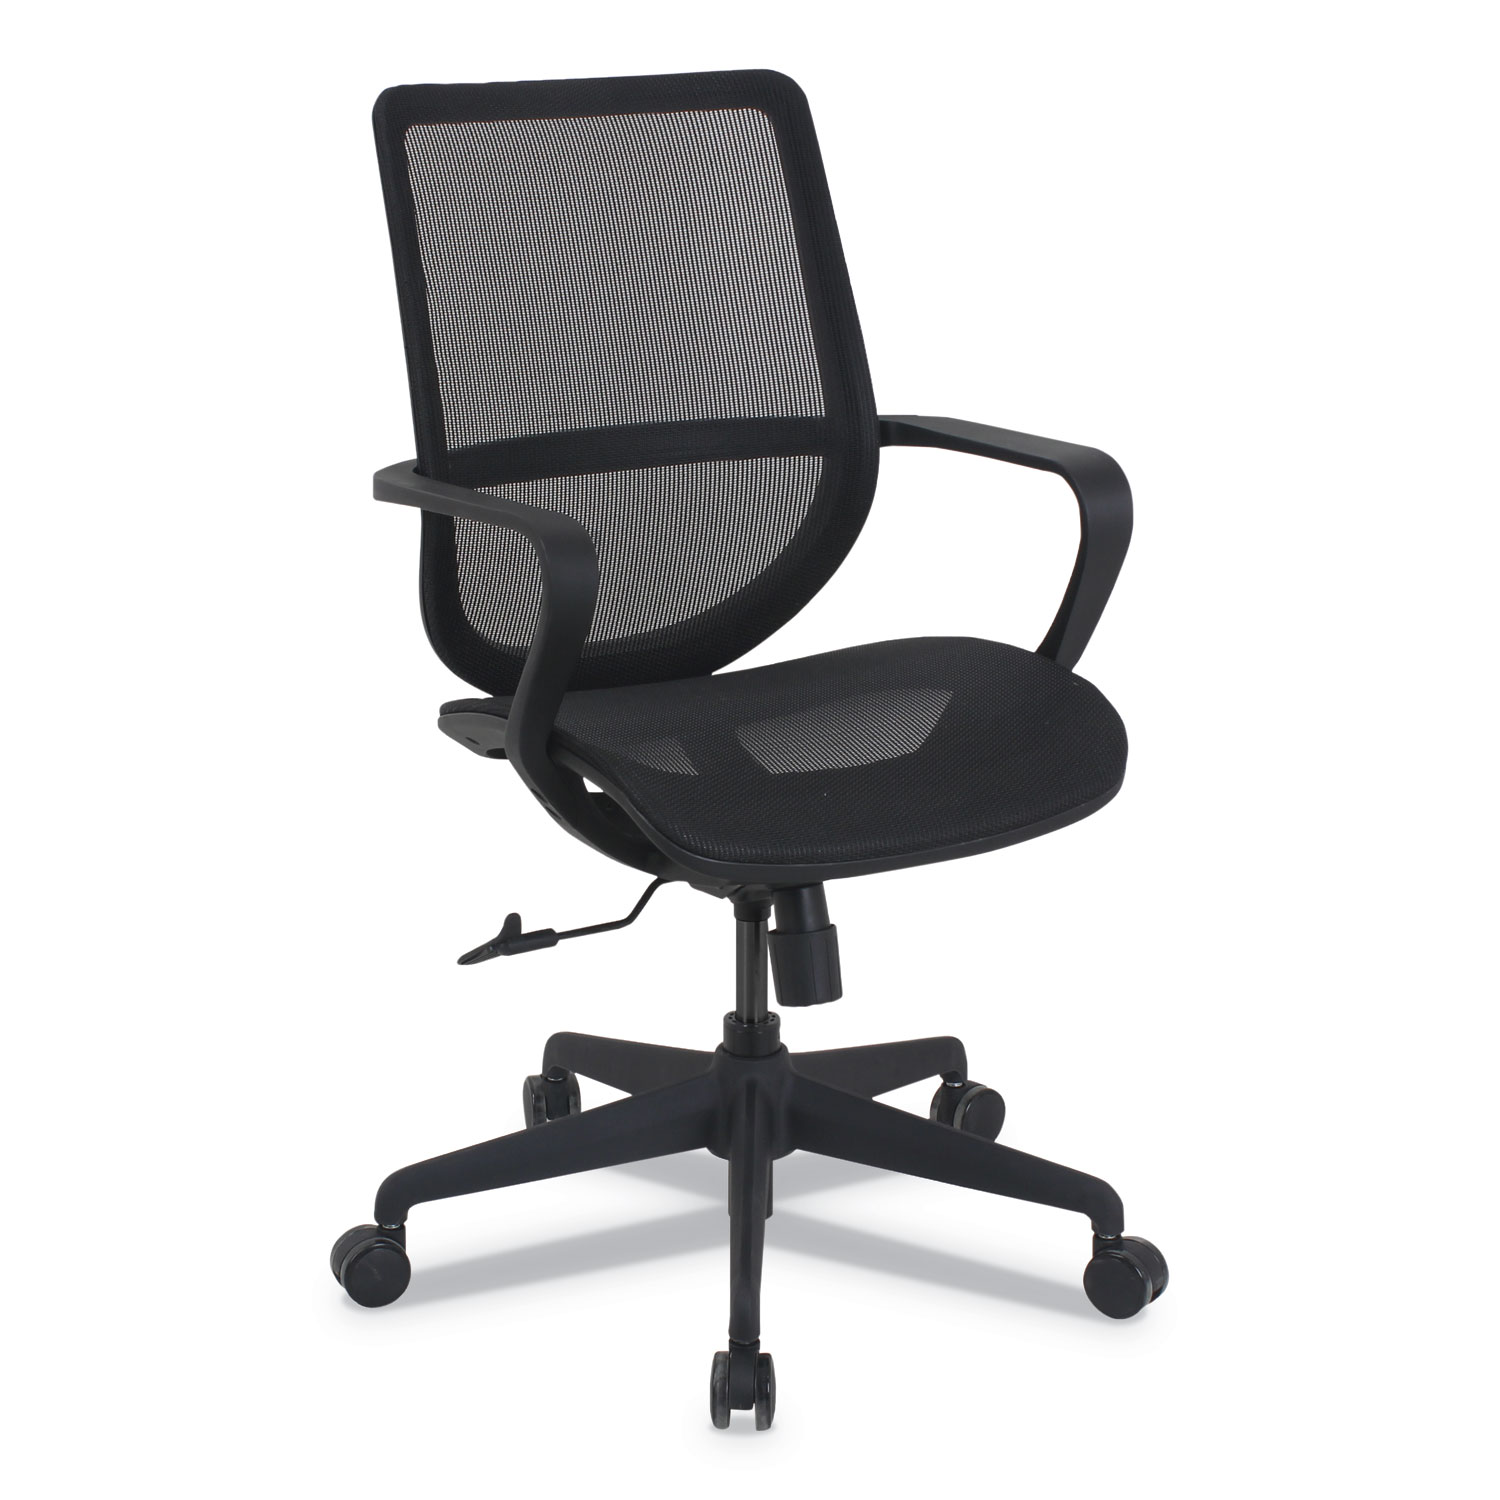  Alera KA14218 Alera Macklin Series Mid-Back All-Mesh Office Chair, Up to 275 lbs., Black Seat/Back, Black Base (ALEKA14218) 